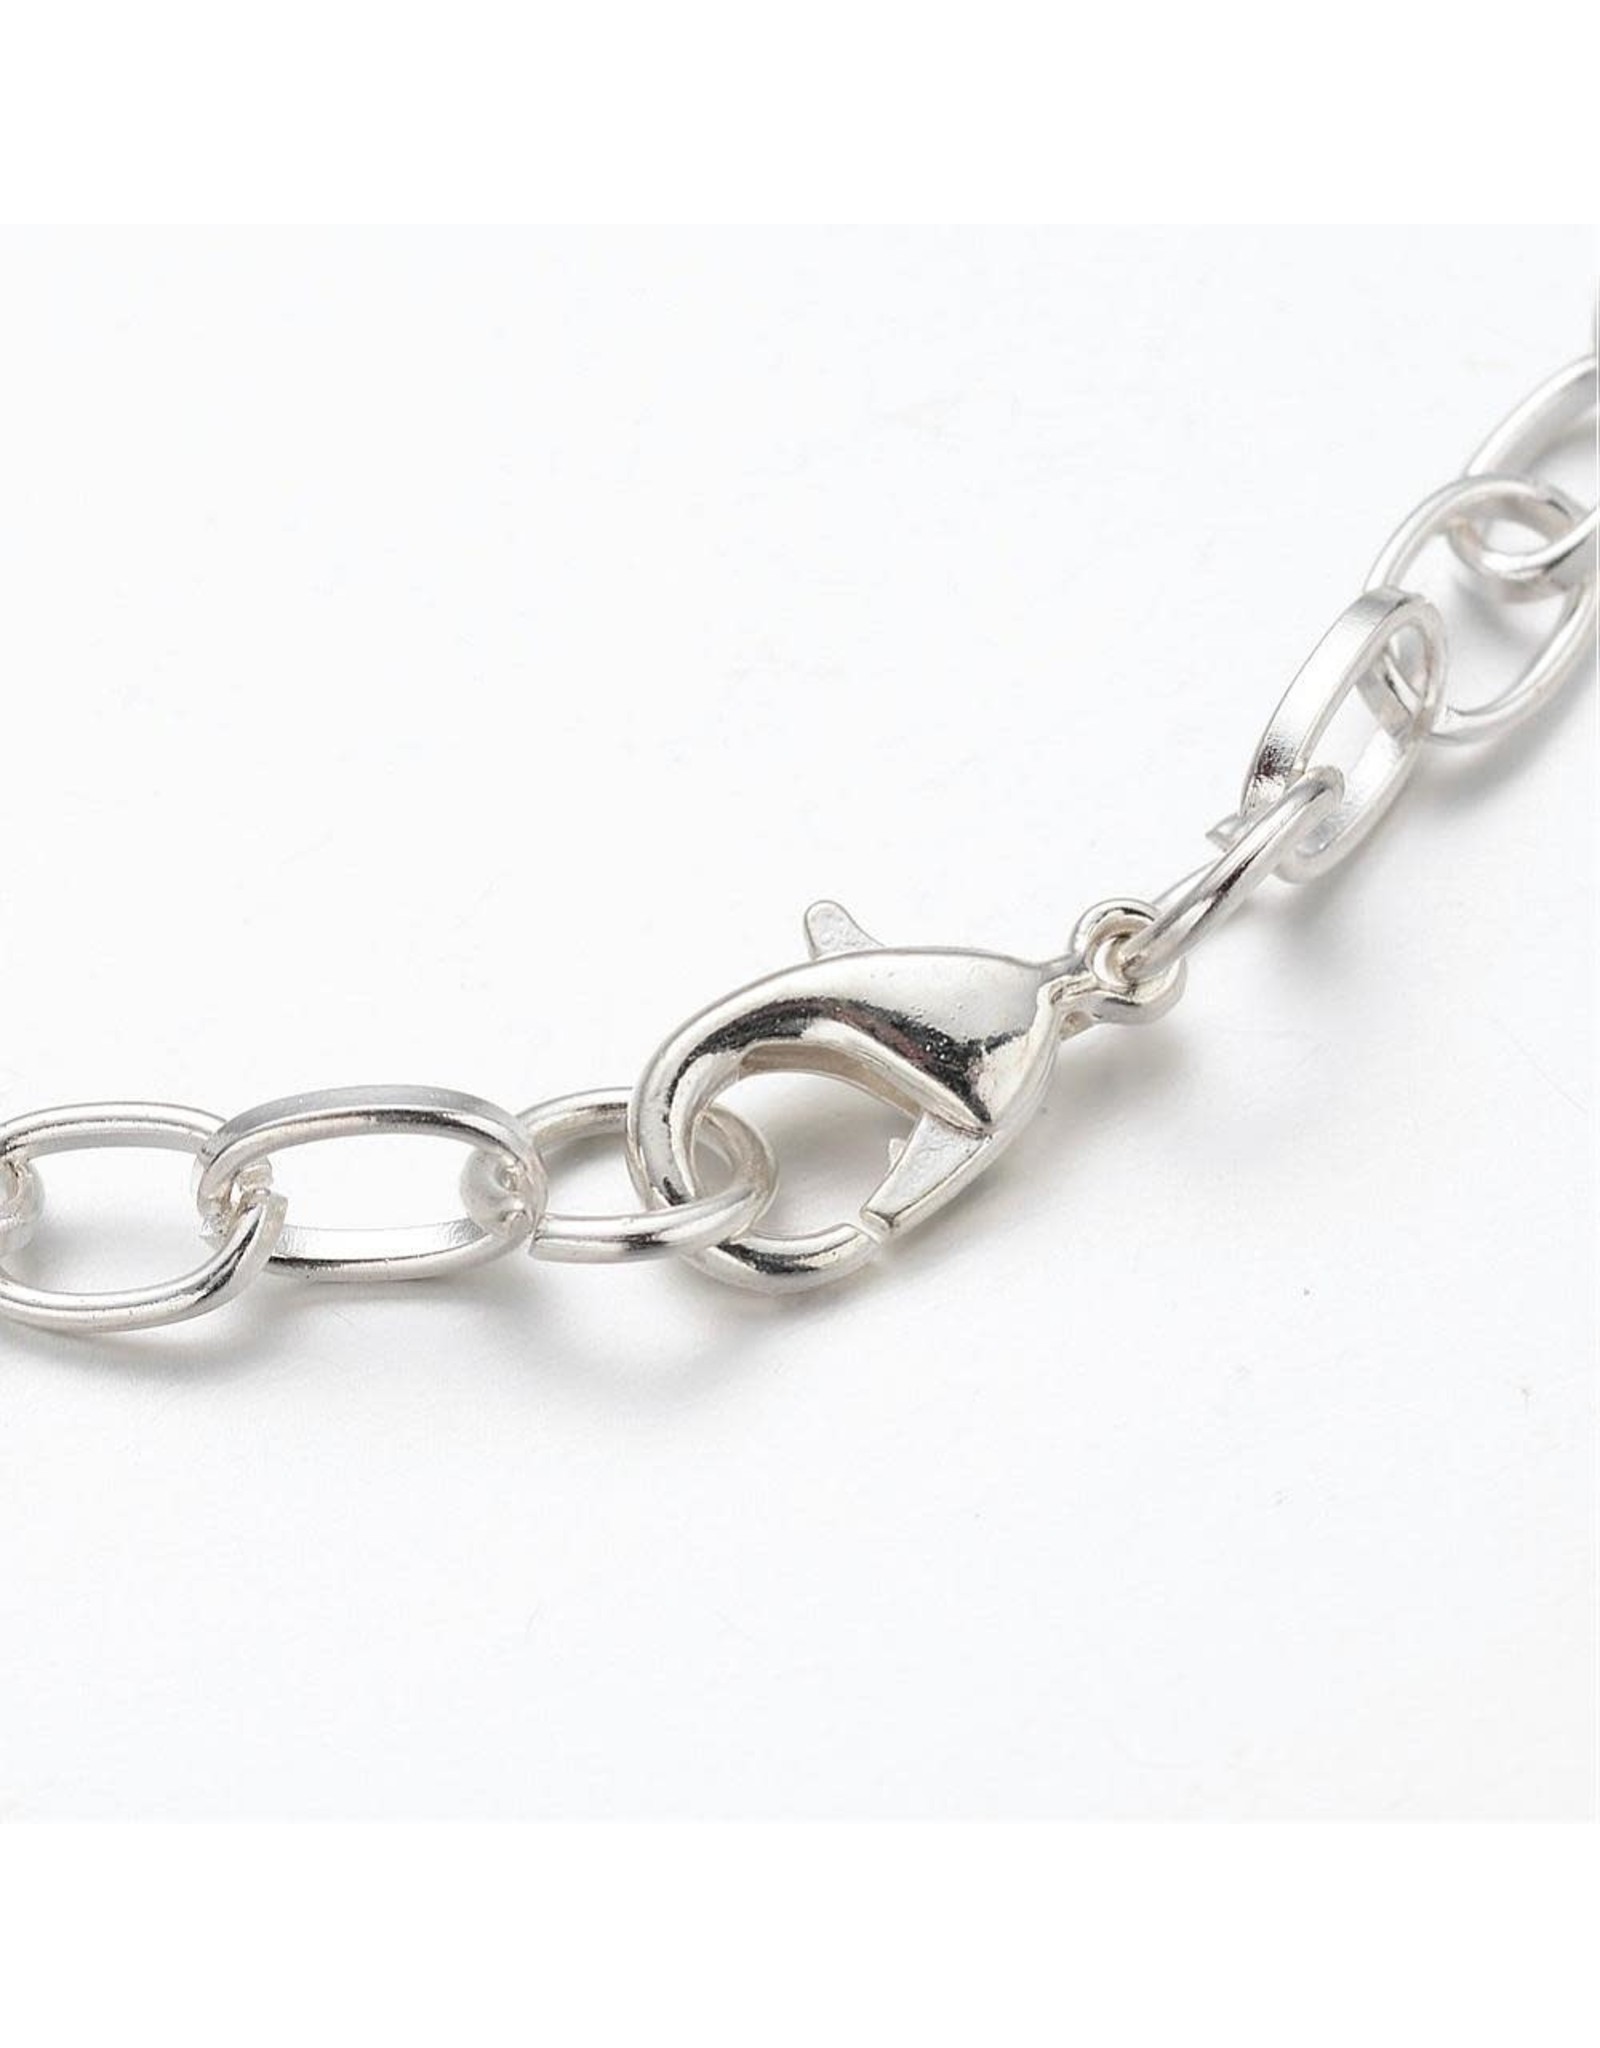 Bracelet Chain 8" Silver  x5